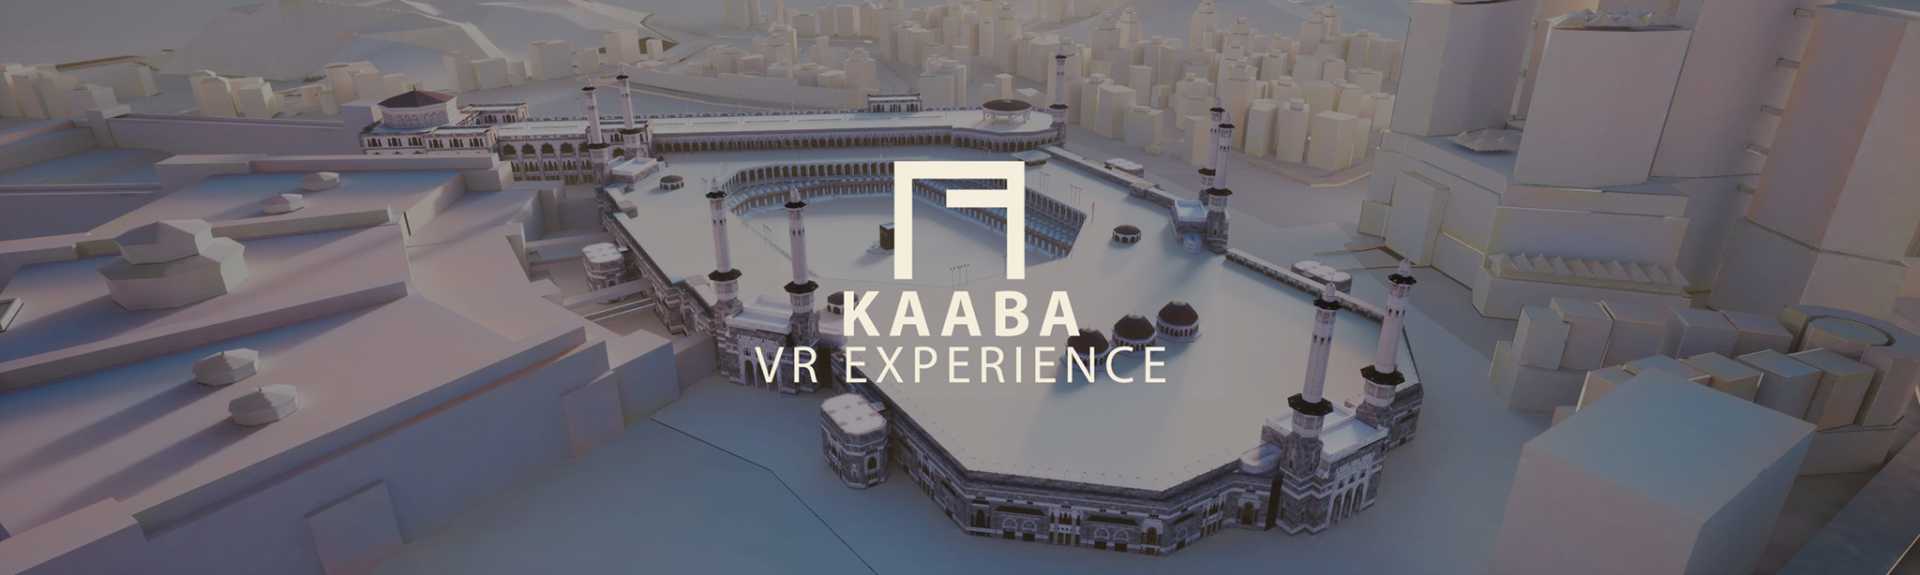 Kaaba Virtual Experience